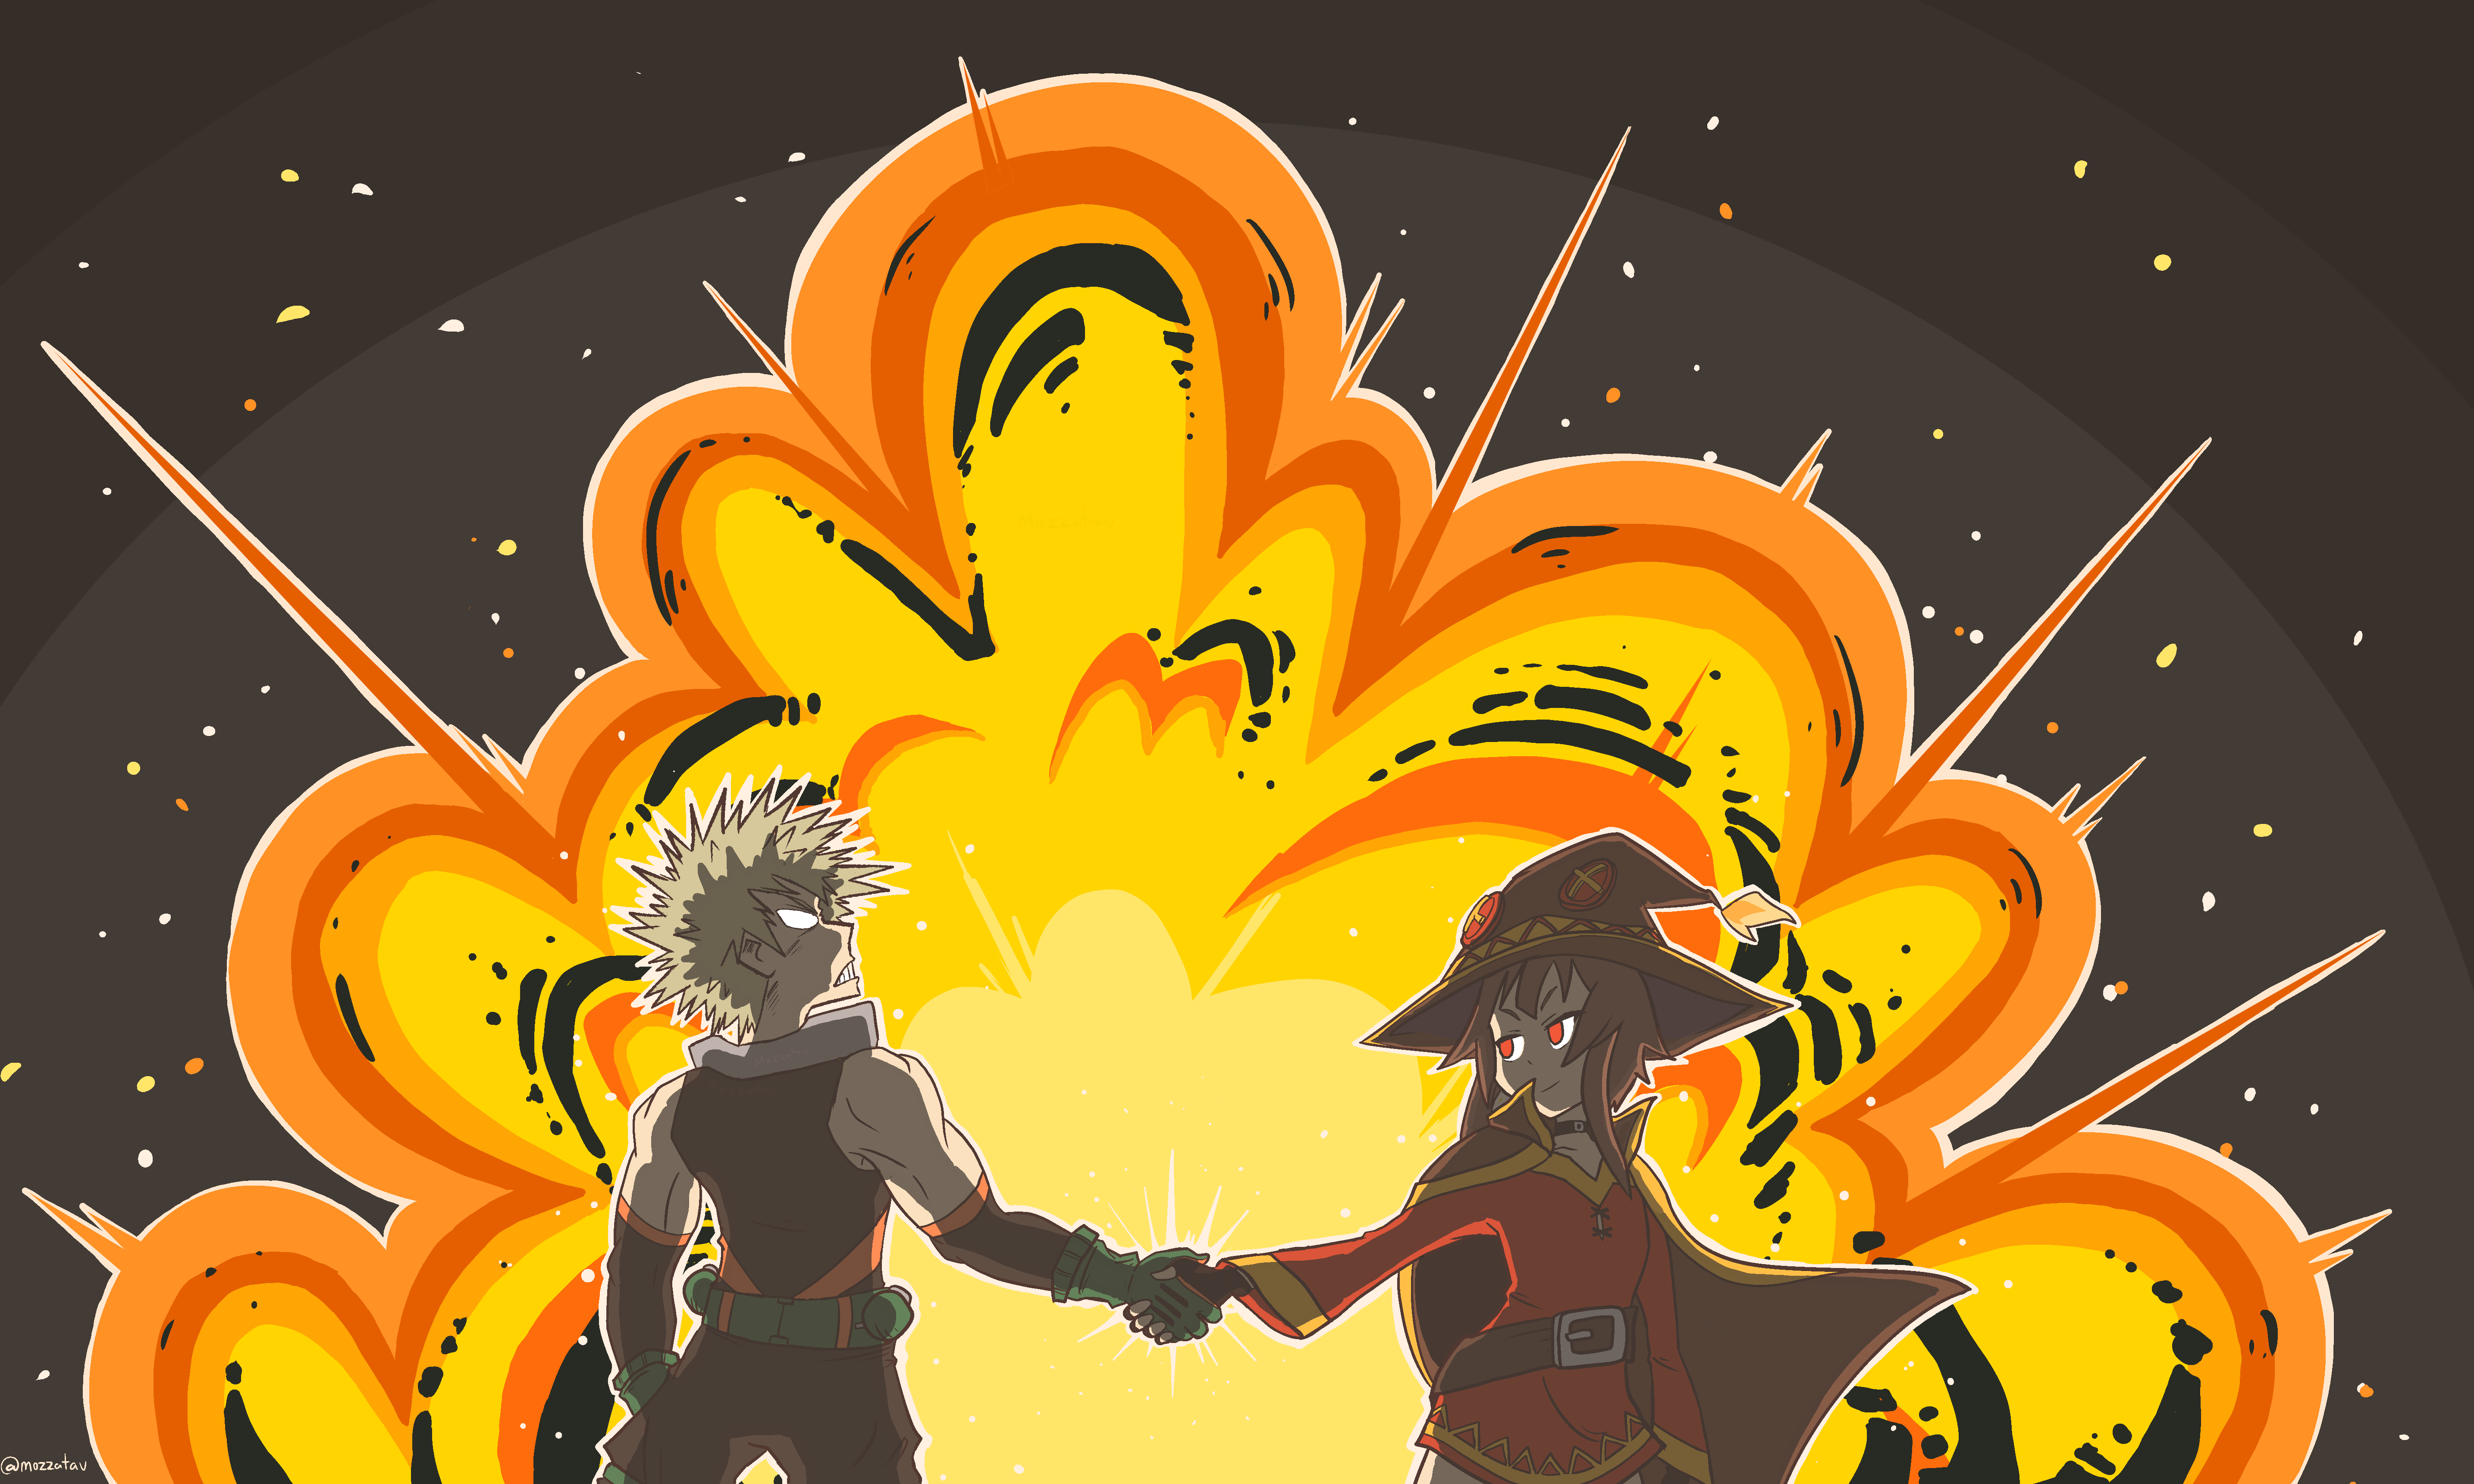 An Explosive Alliance by Mozzatav